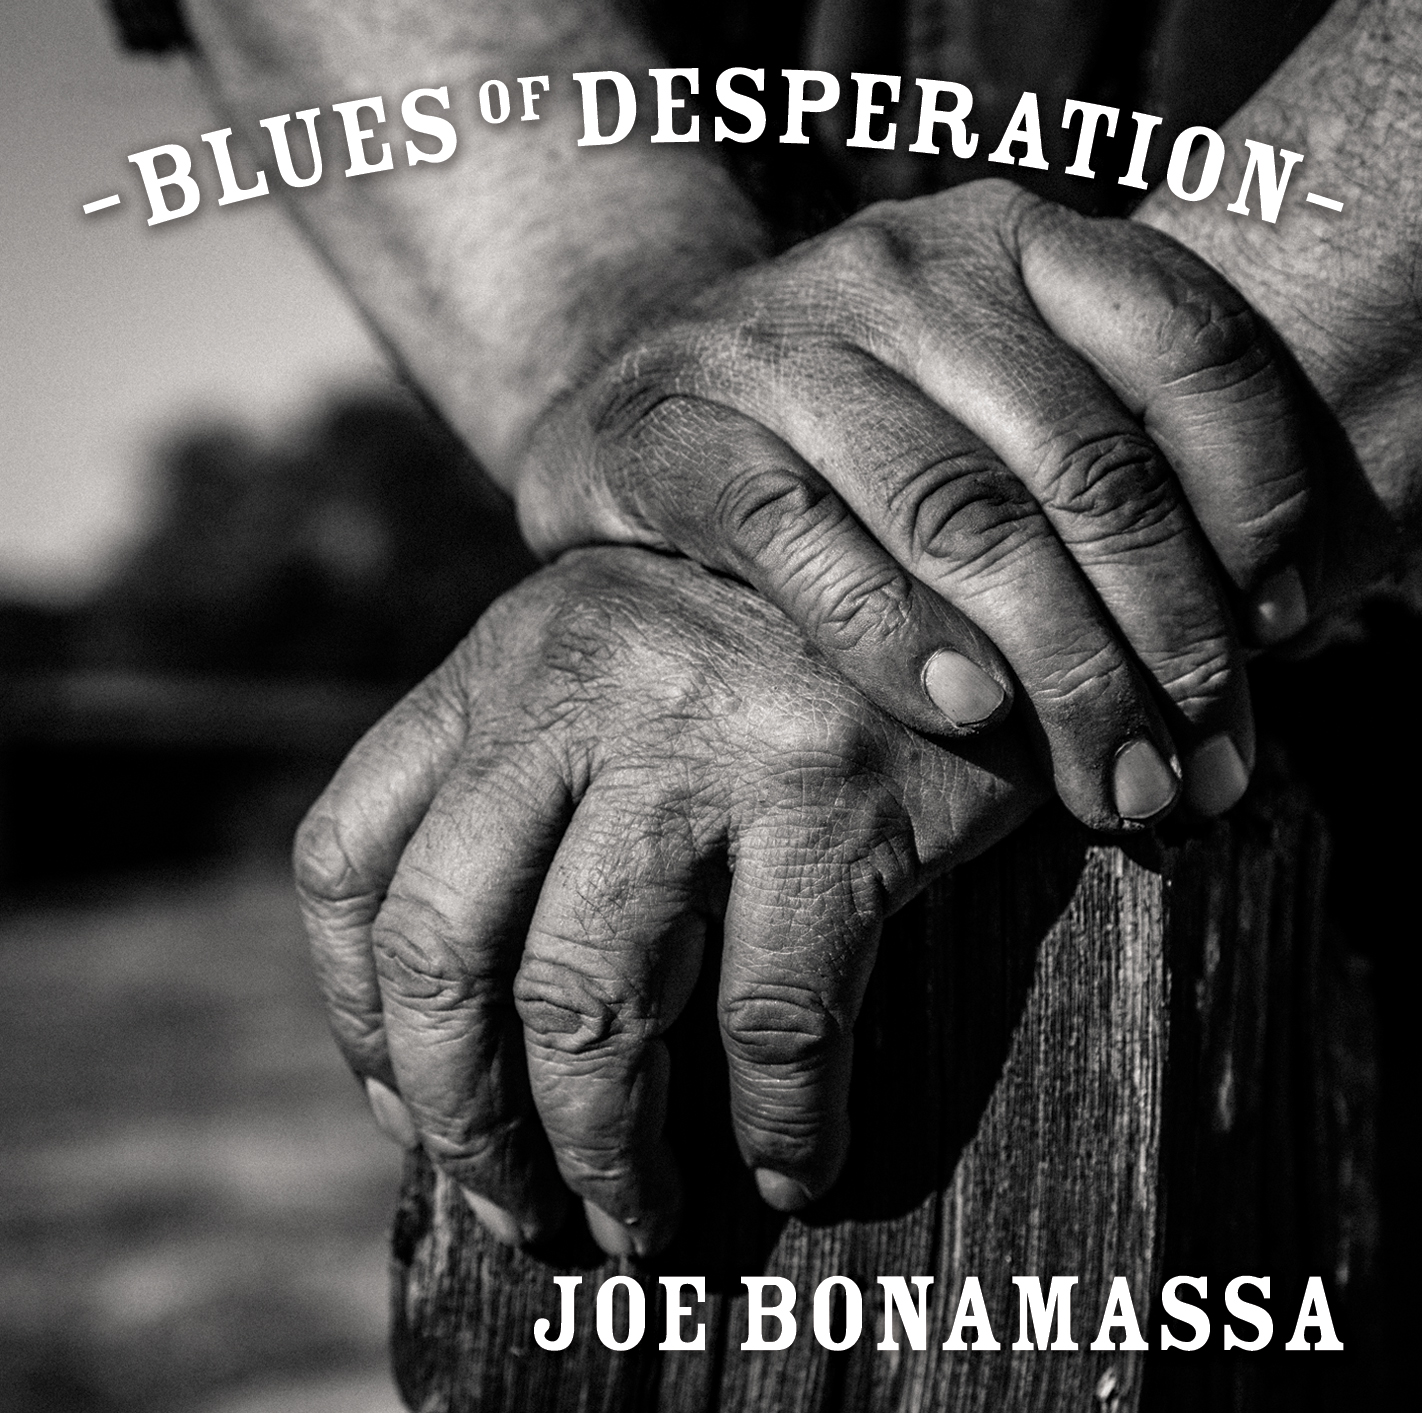 joe-bonamassablues-desperationalbum-artwork1.jpg